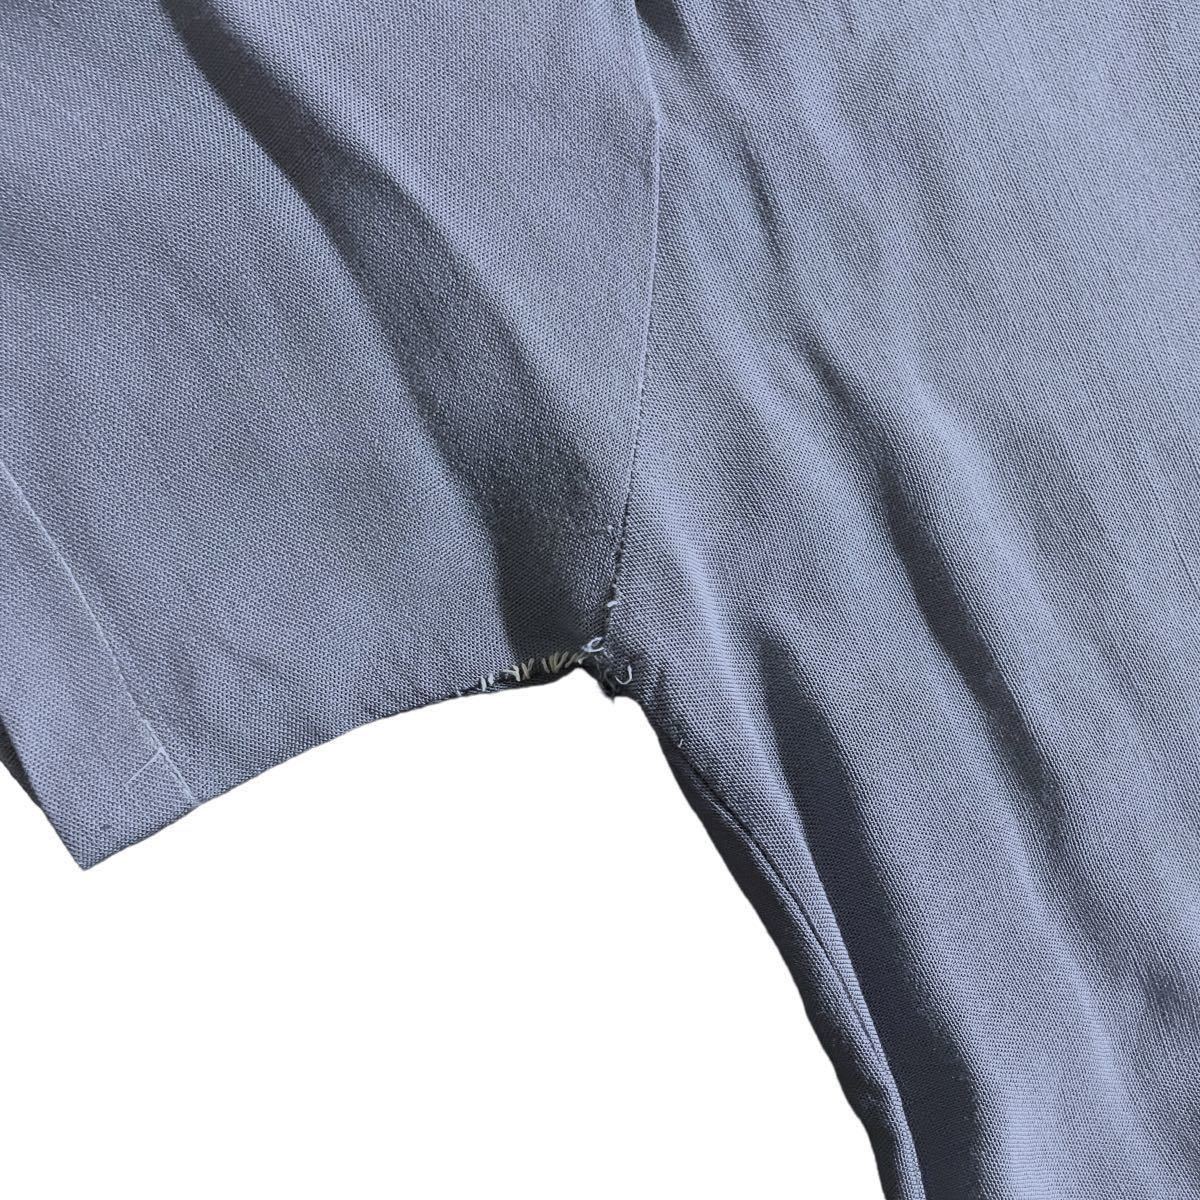  gray pin [40s USA made Pilgrim Cumpari rayon gyaba Gin shirt S] Vintage open color gray black pink on blur old clothes 